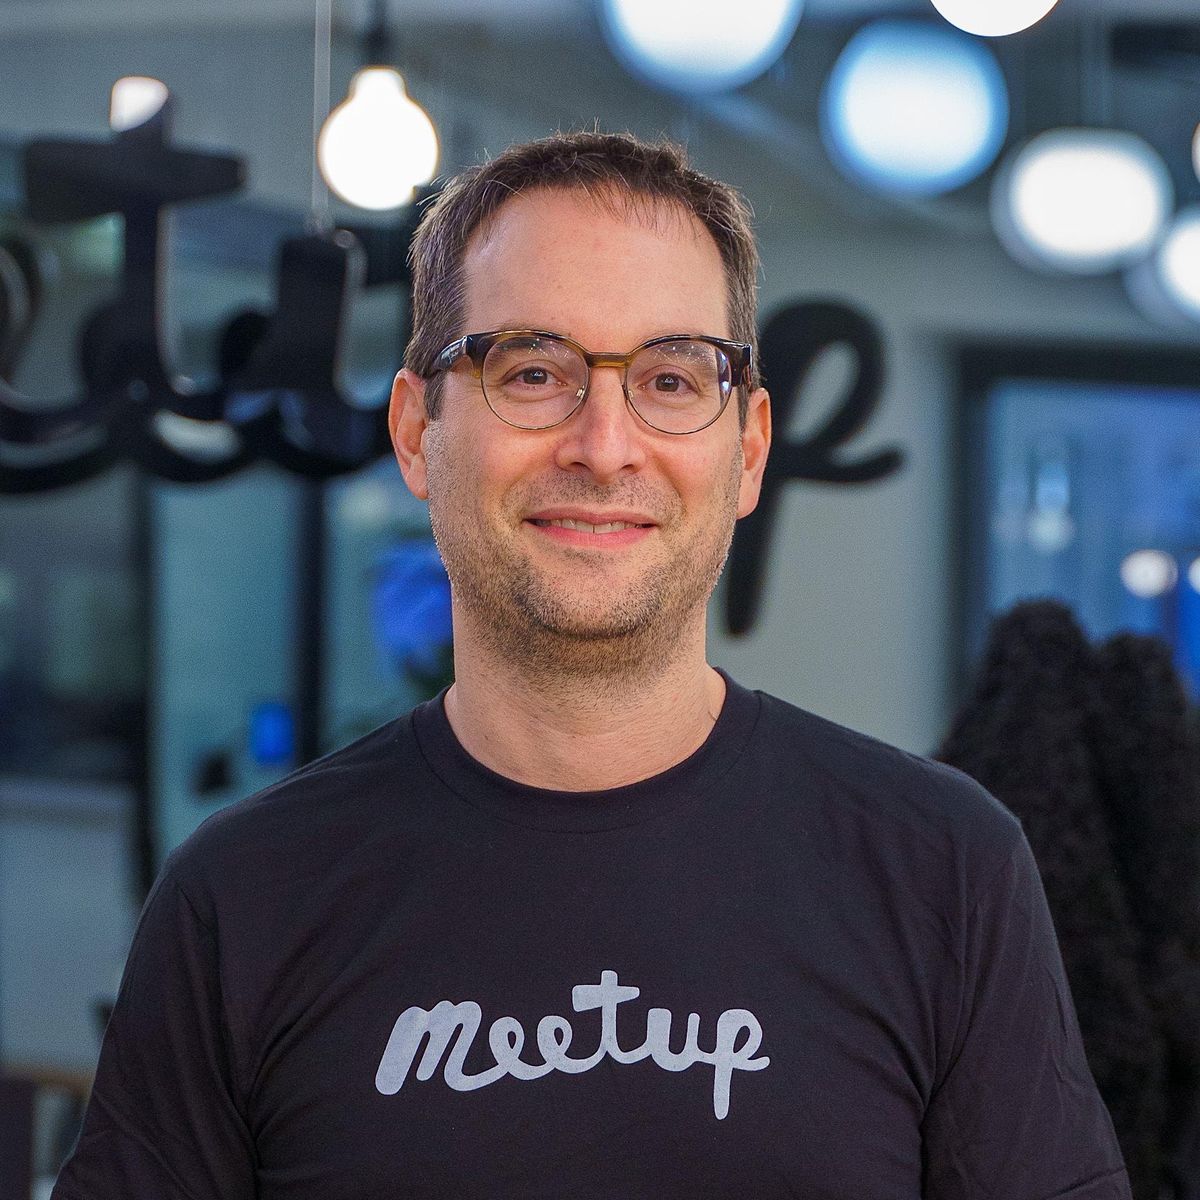 Meetup.com CEO Talk:  How to Pivot Your Business Model